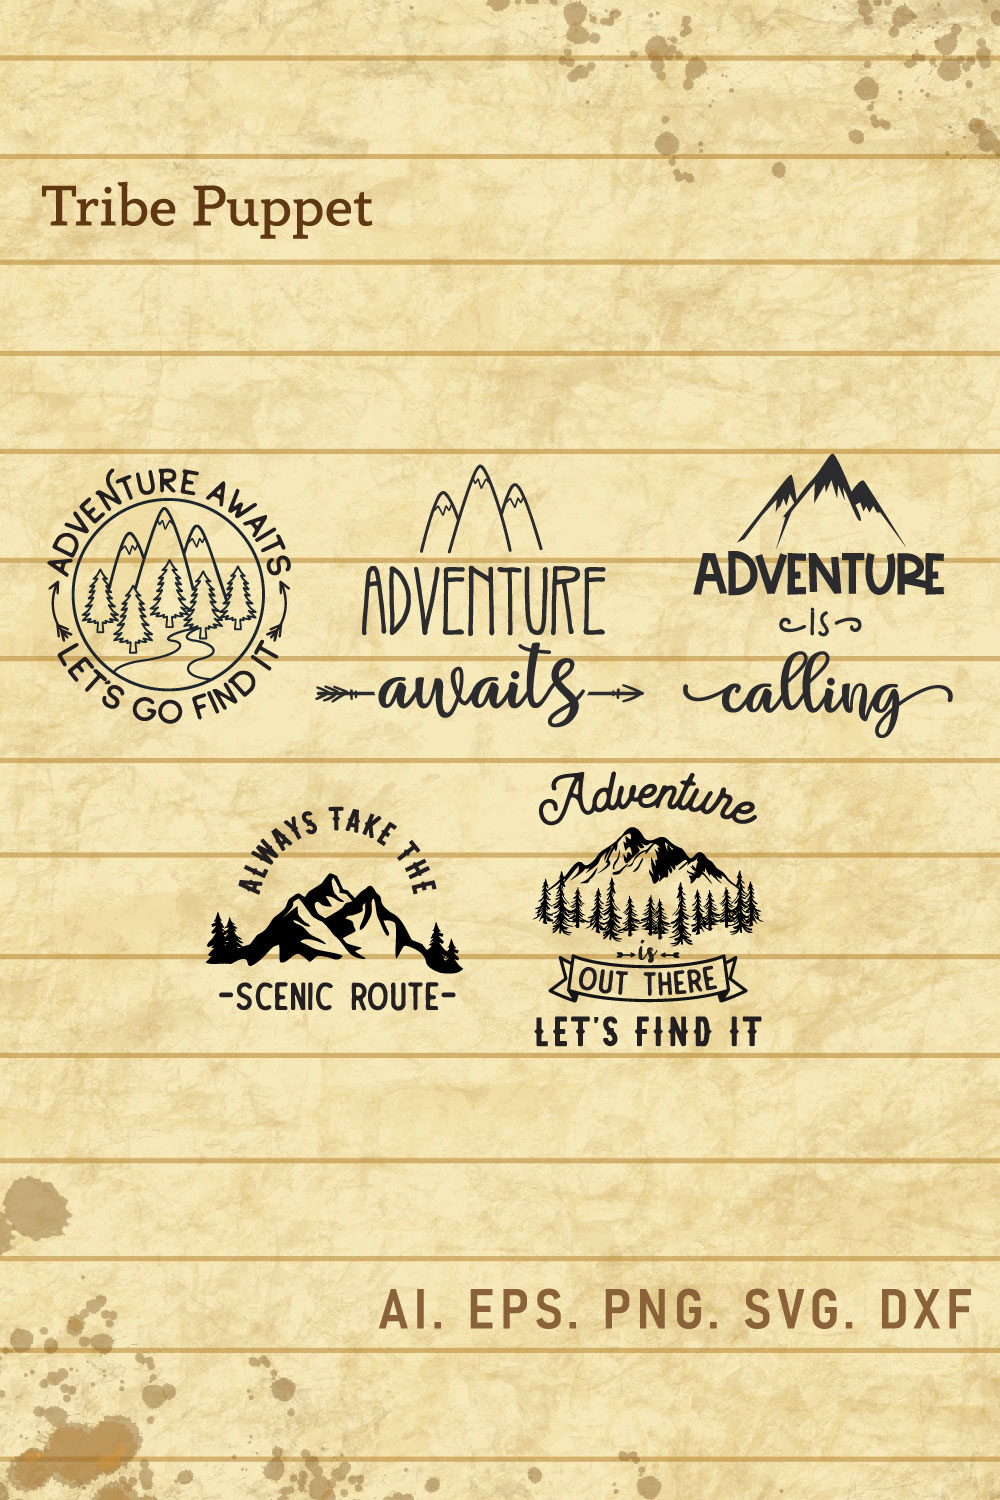 Adventure Typo pinterest preview image.